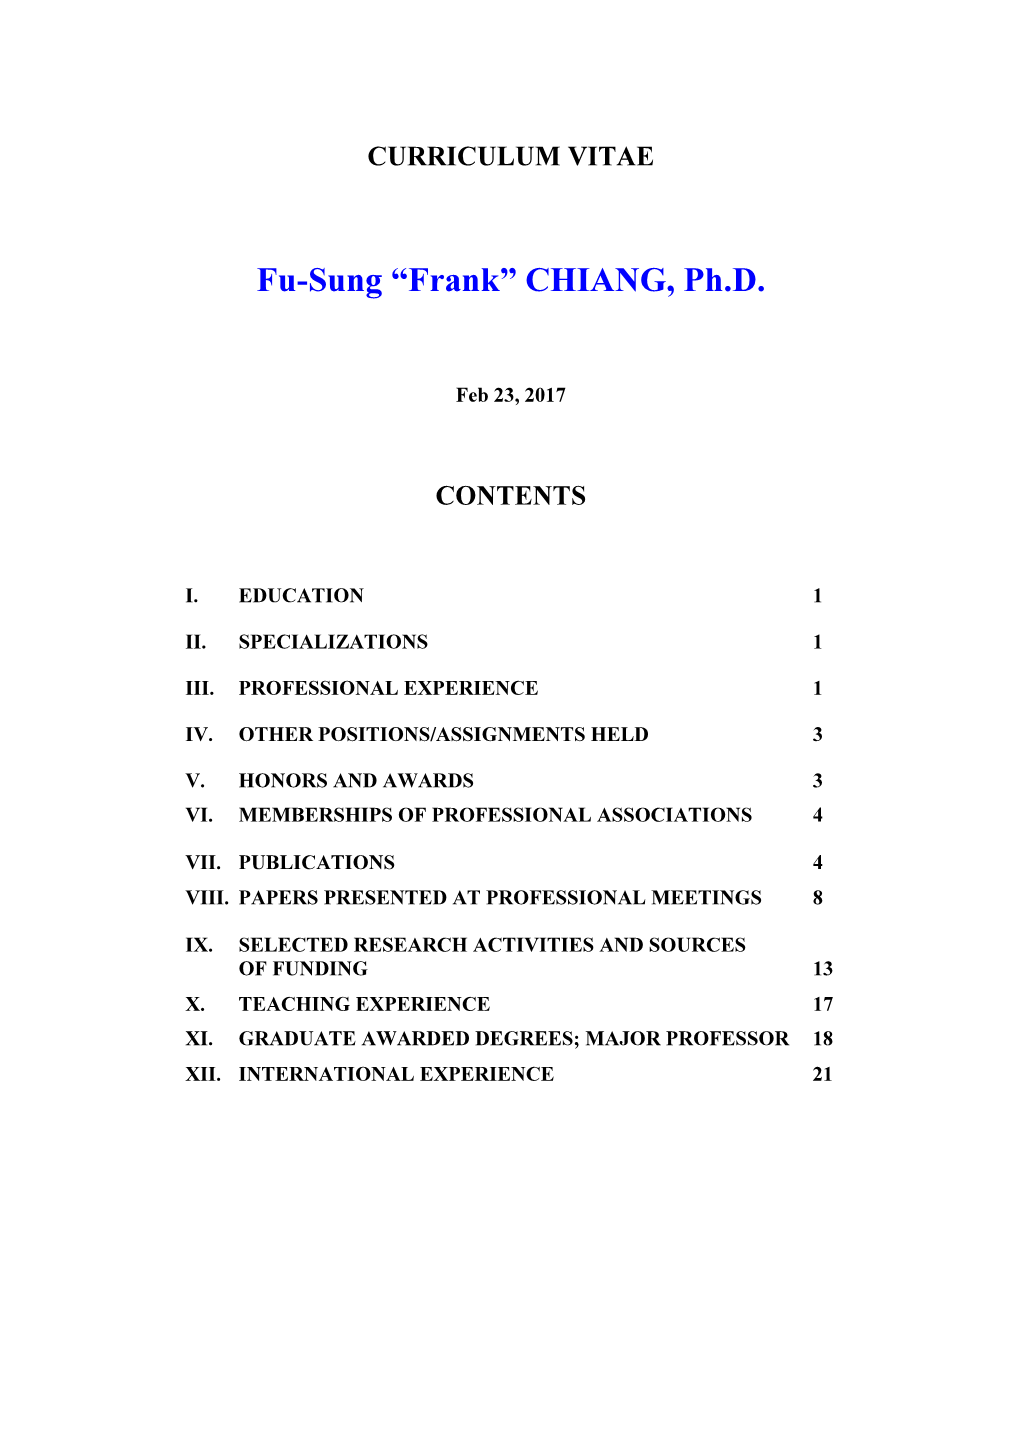 Fu-Sung “Frank” CHIANG, Ph.D